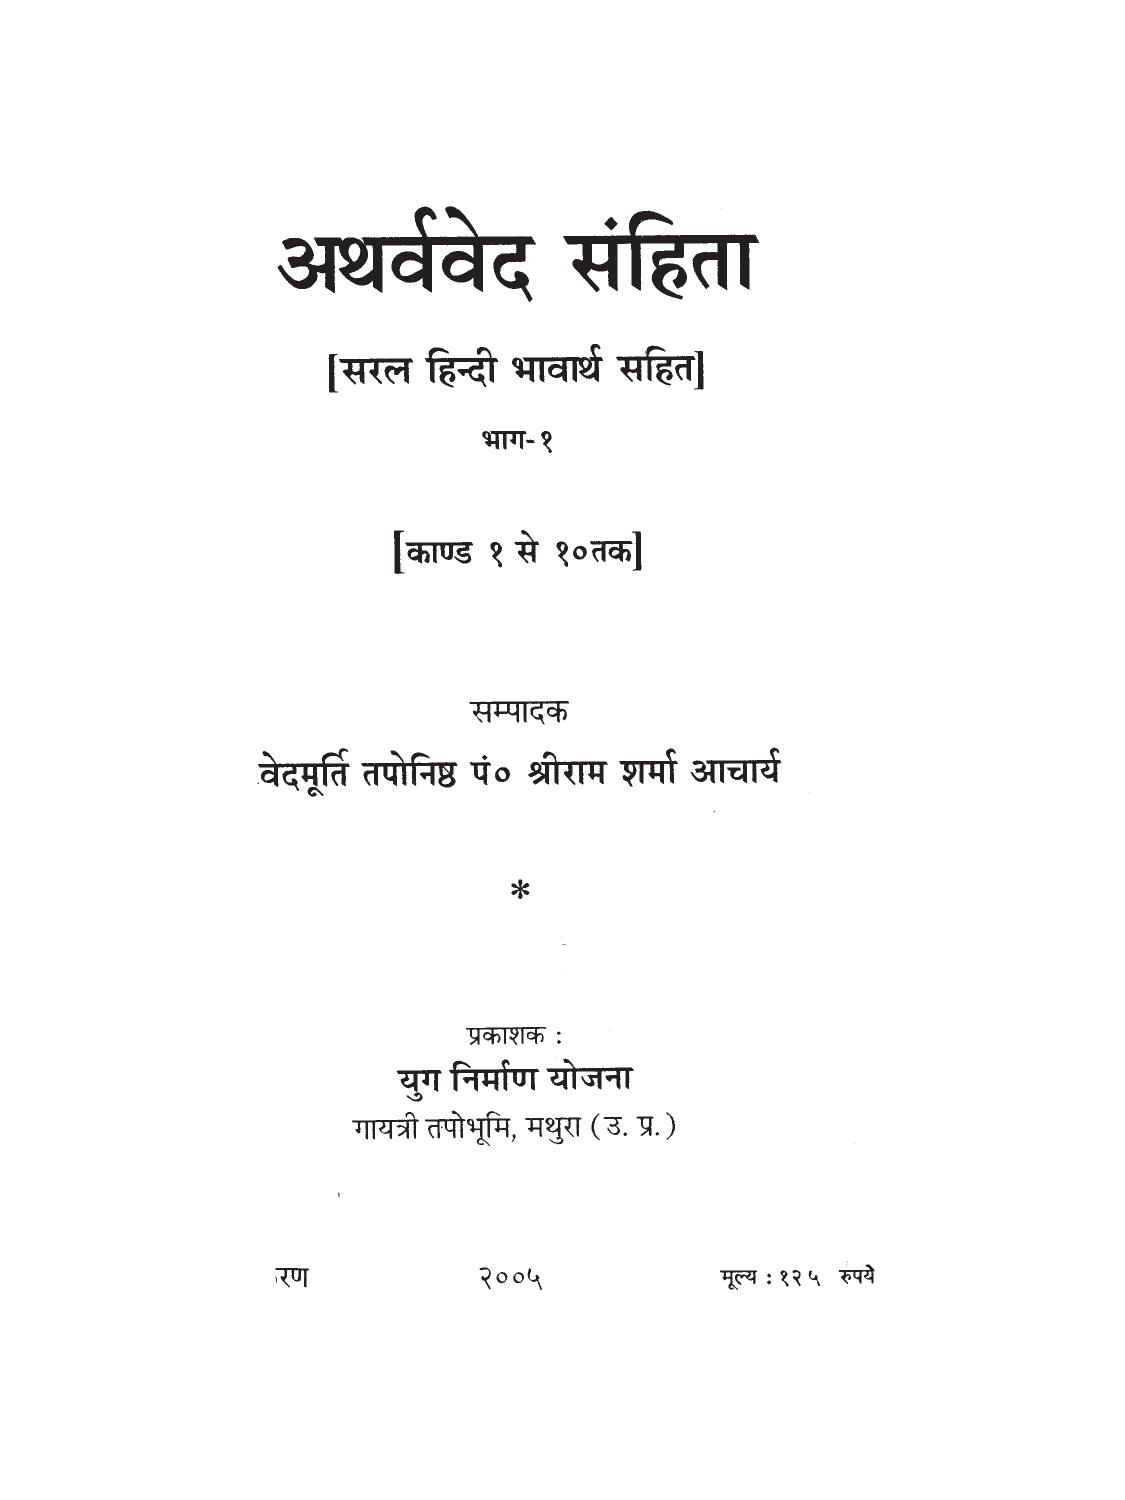 अथर्ववेद संहिता सरल हिन्दी भावार्थ सहित  भाग १ Atharva Veda Samhita